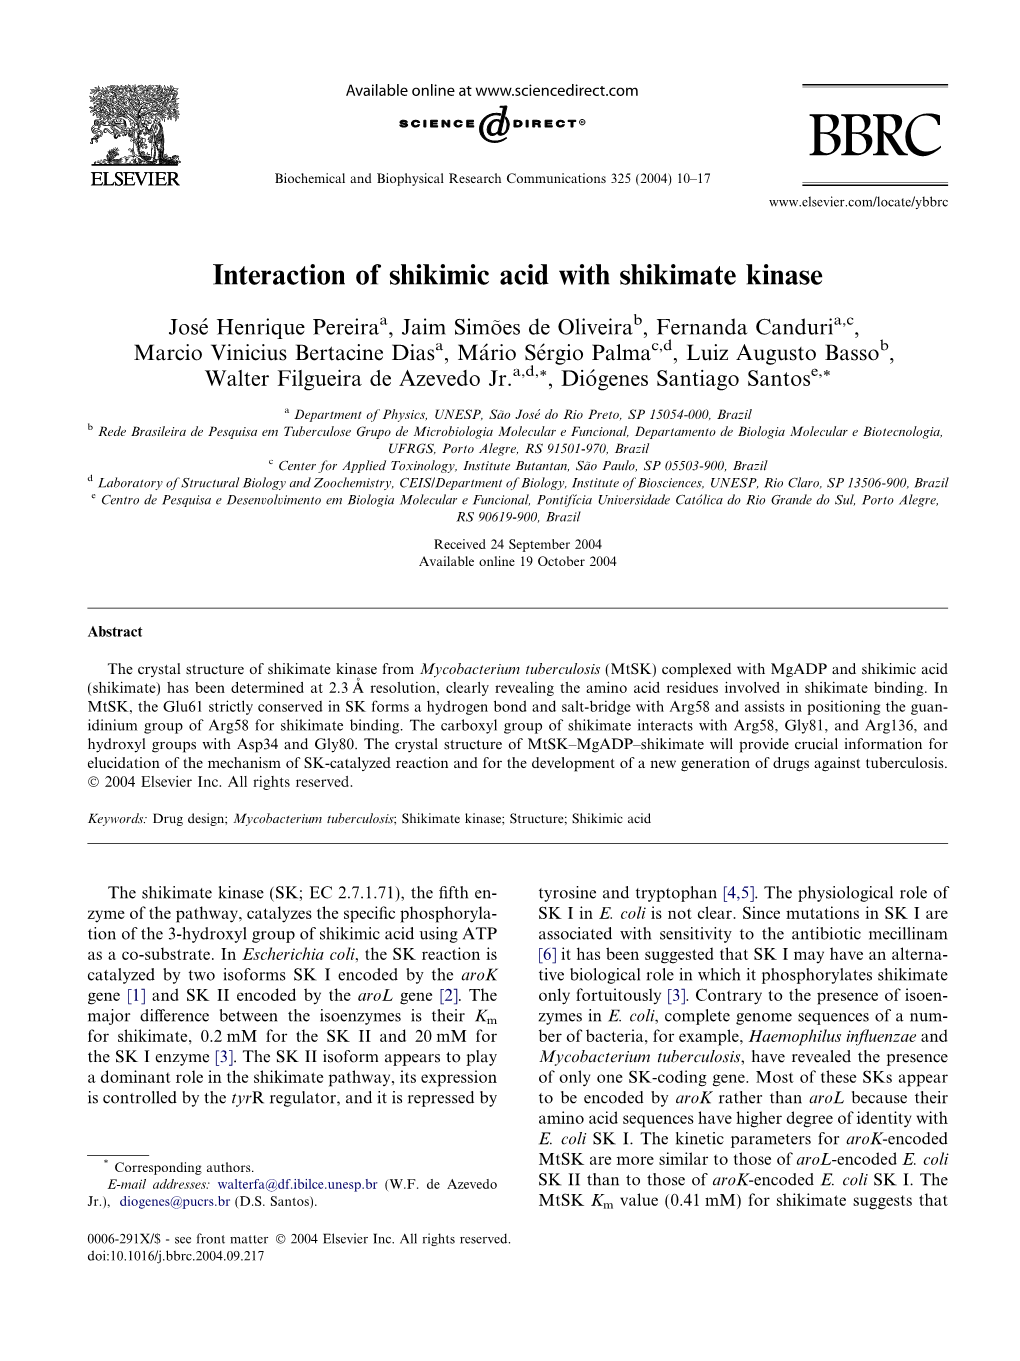 Interaction of Shikimic Acid with Shikimate Kinase